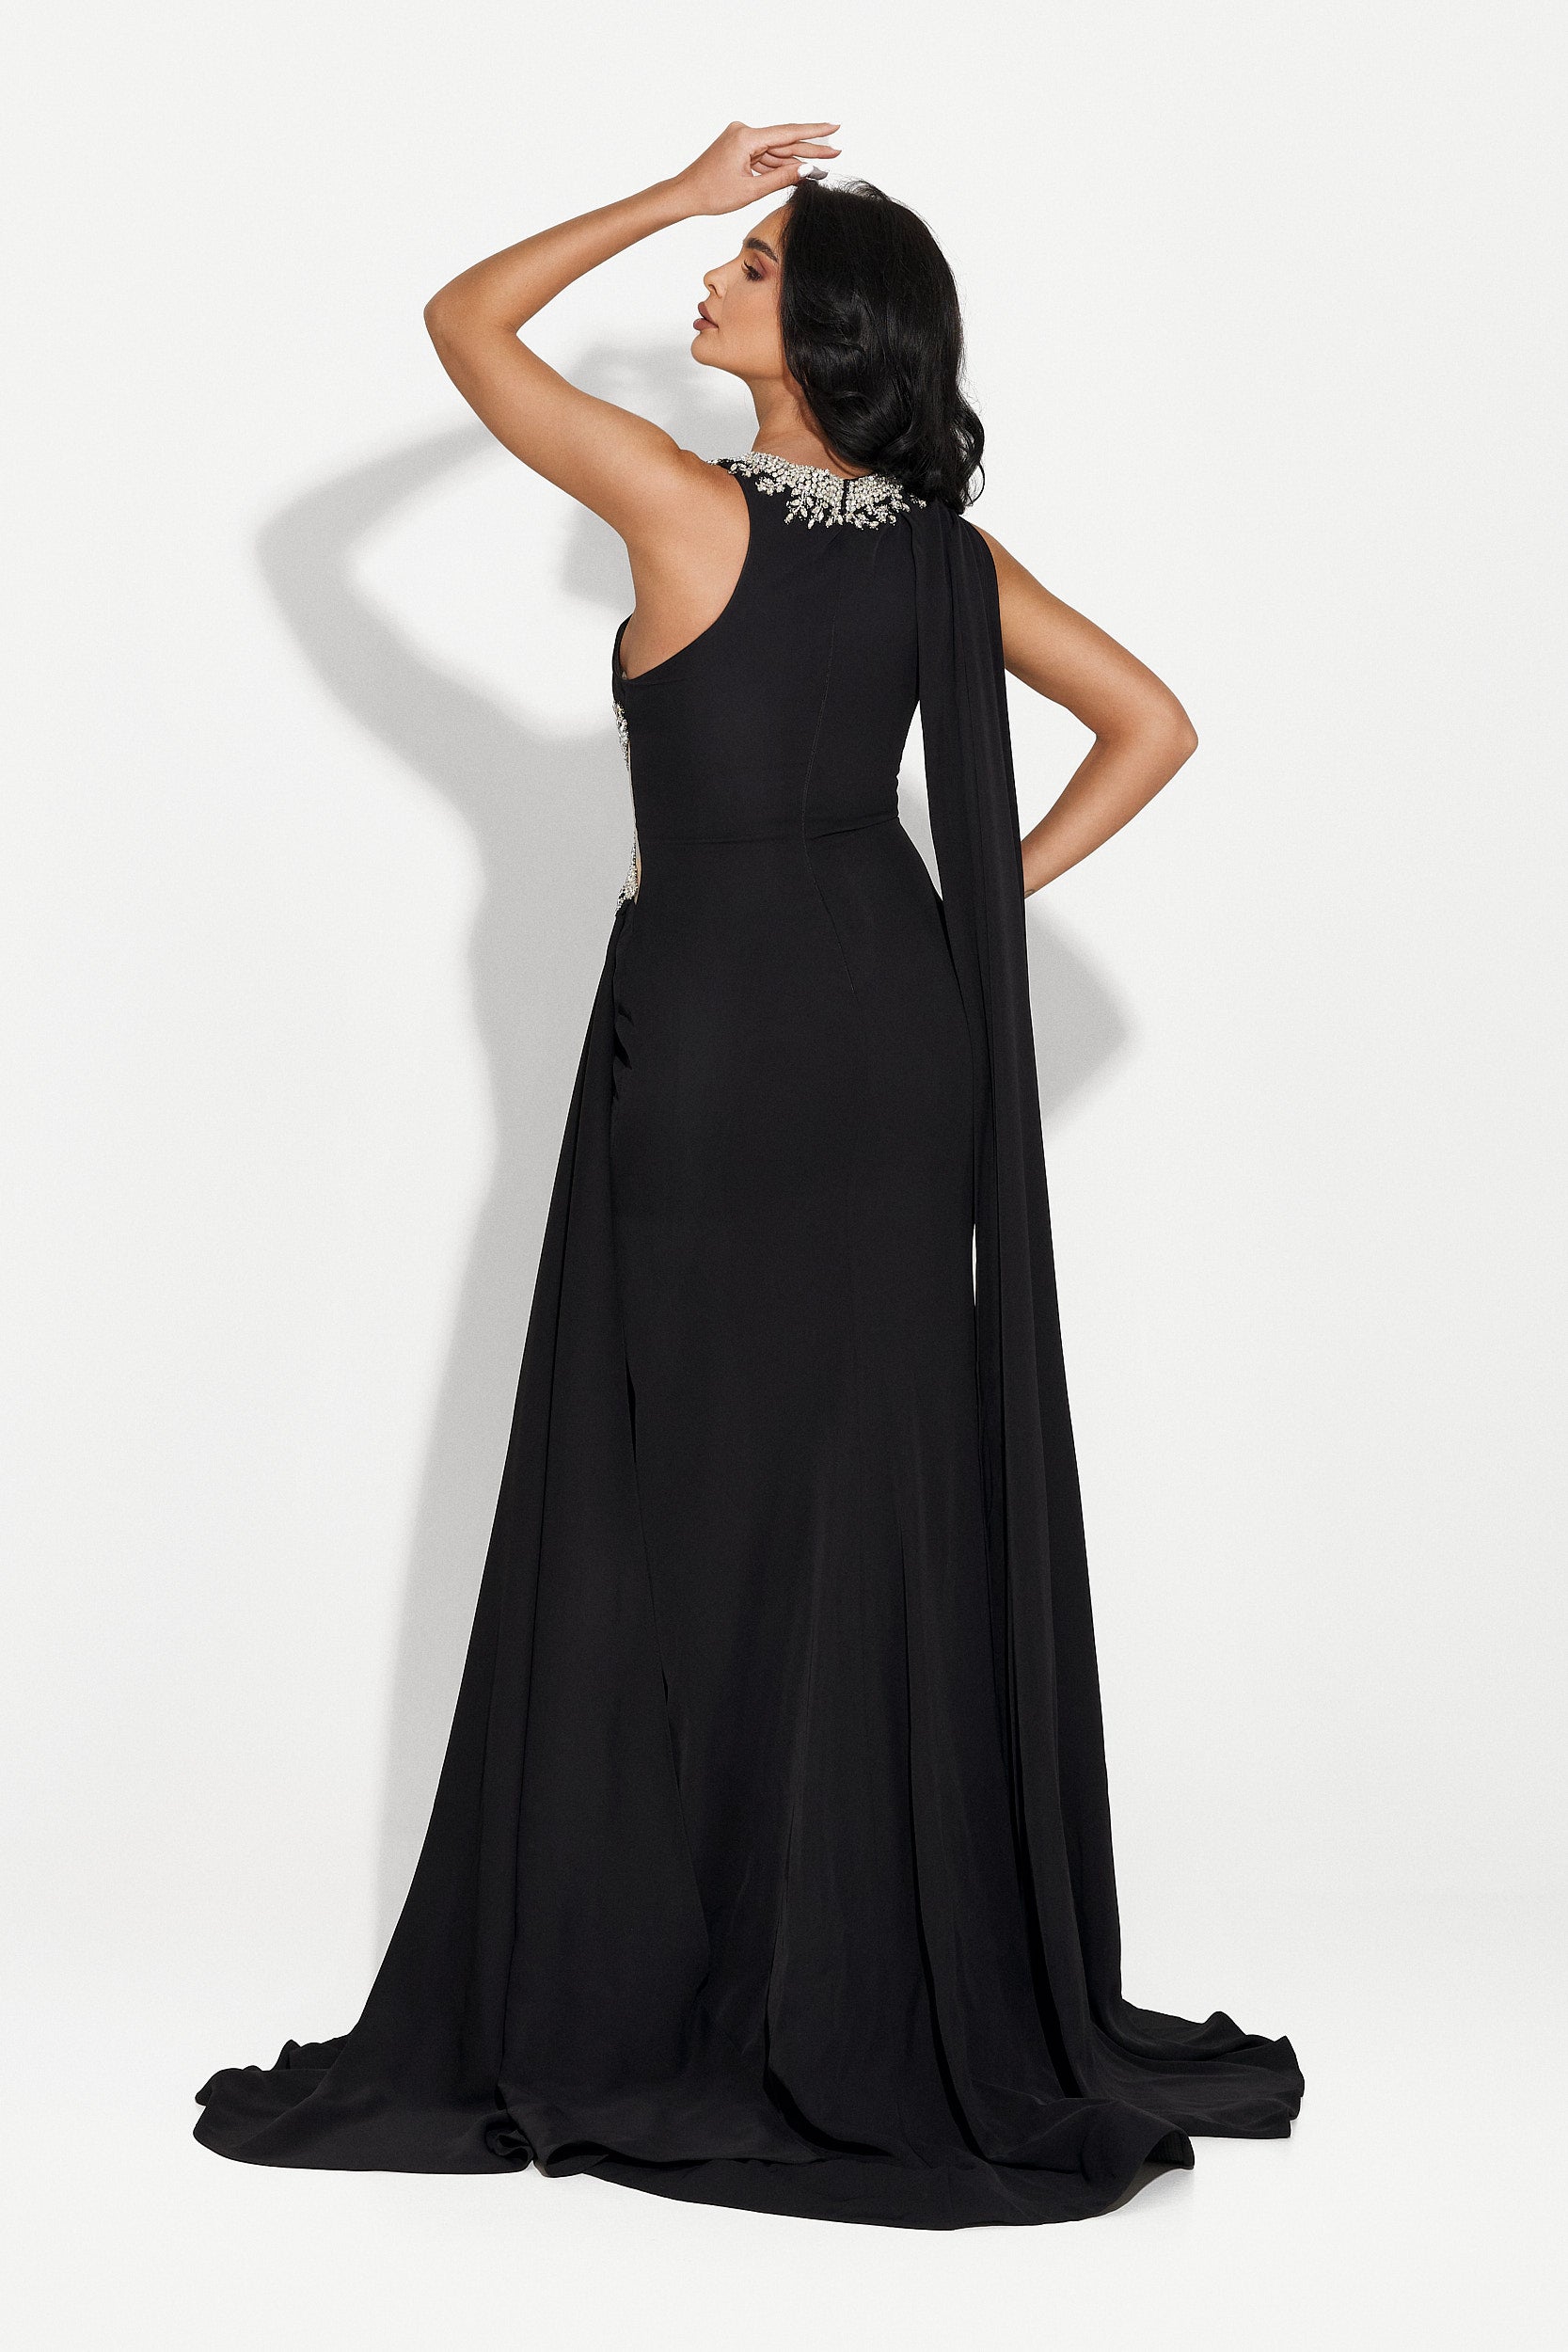 Alexea Bogas hosszú fekete női ruha